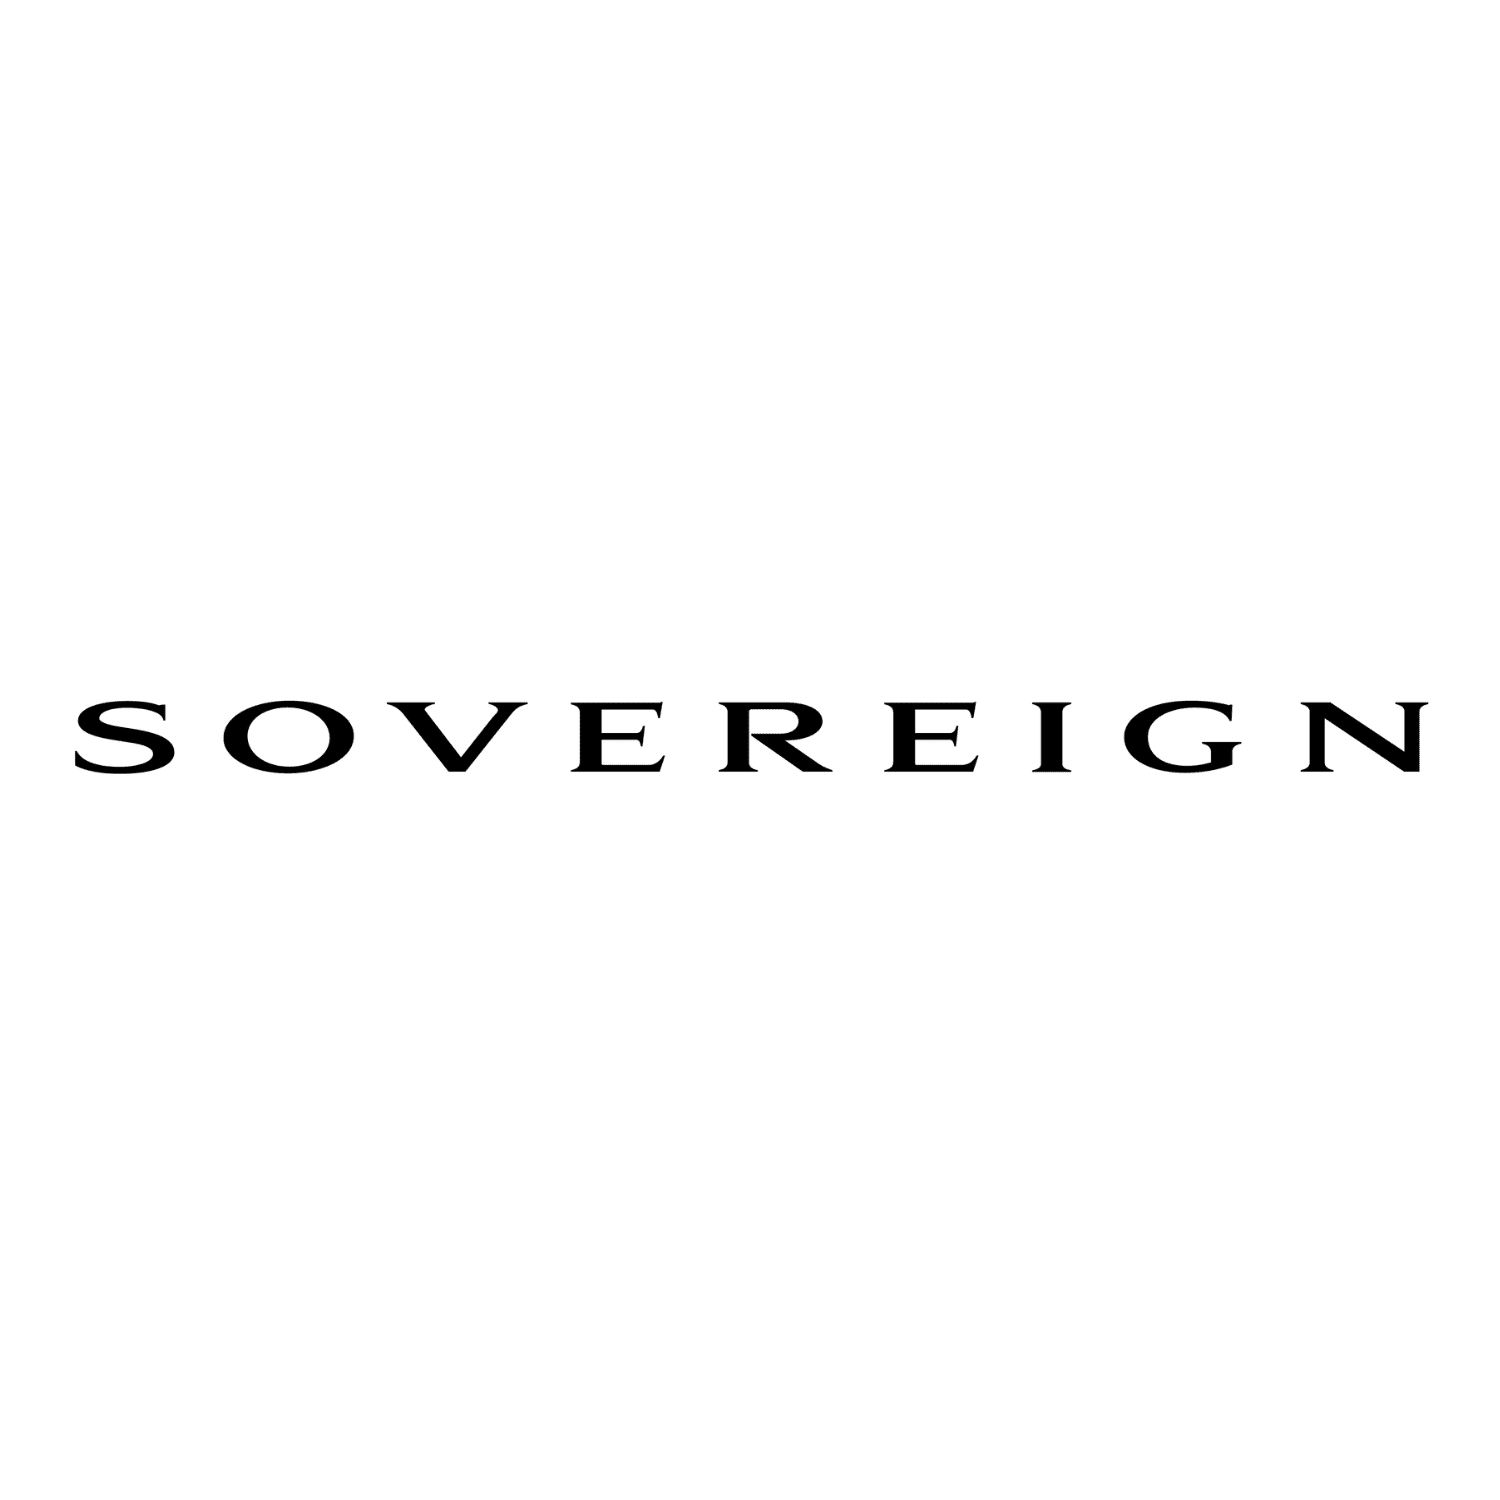 sovereign vinyl sticker black